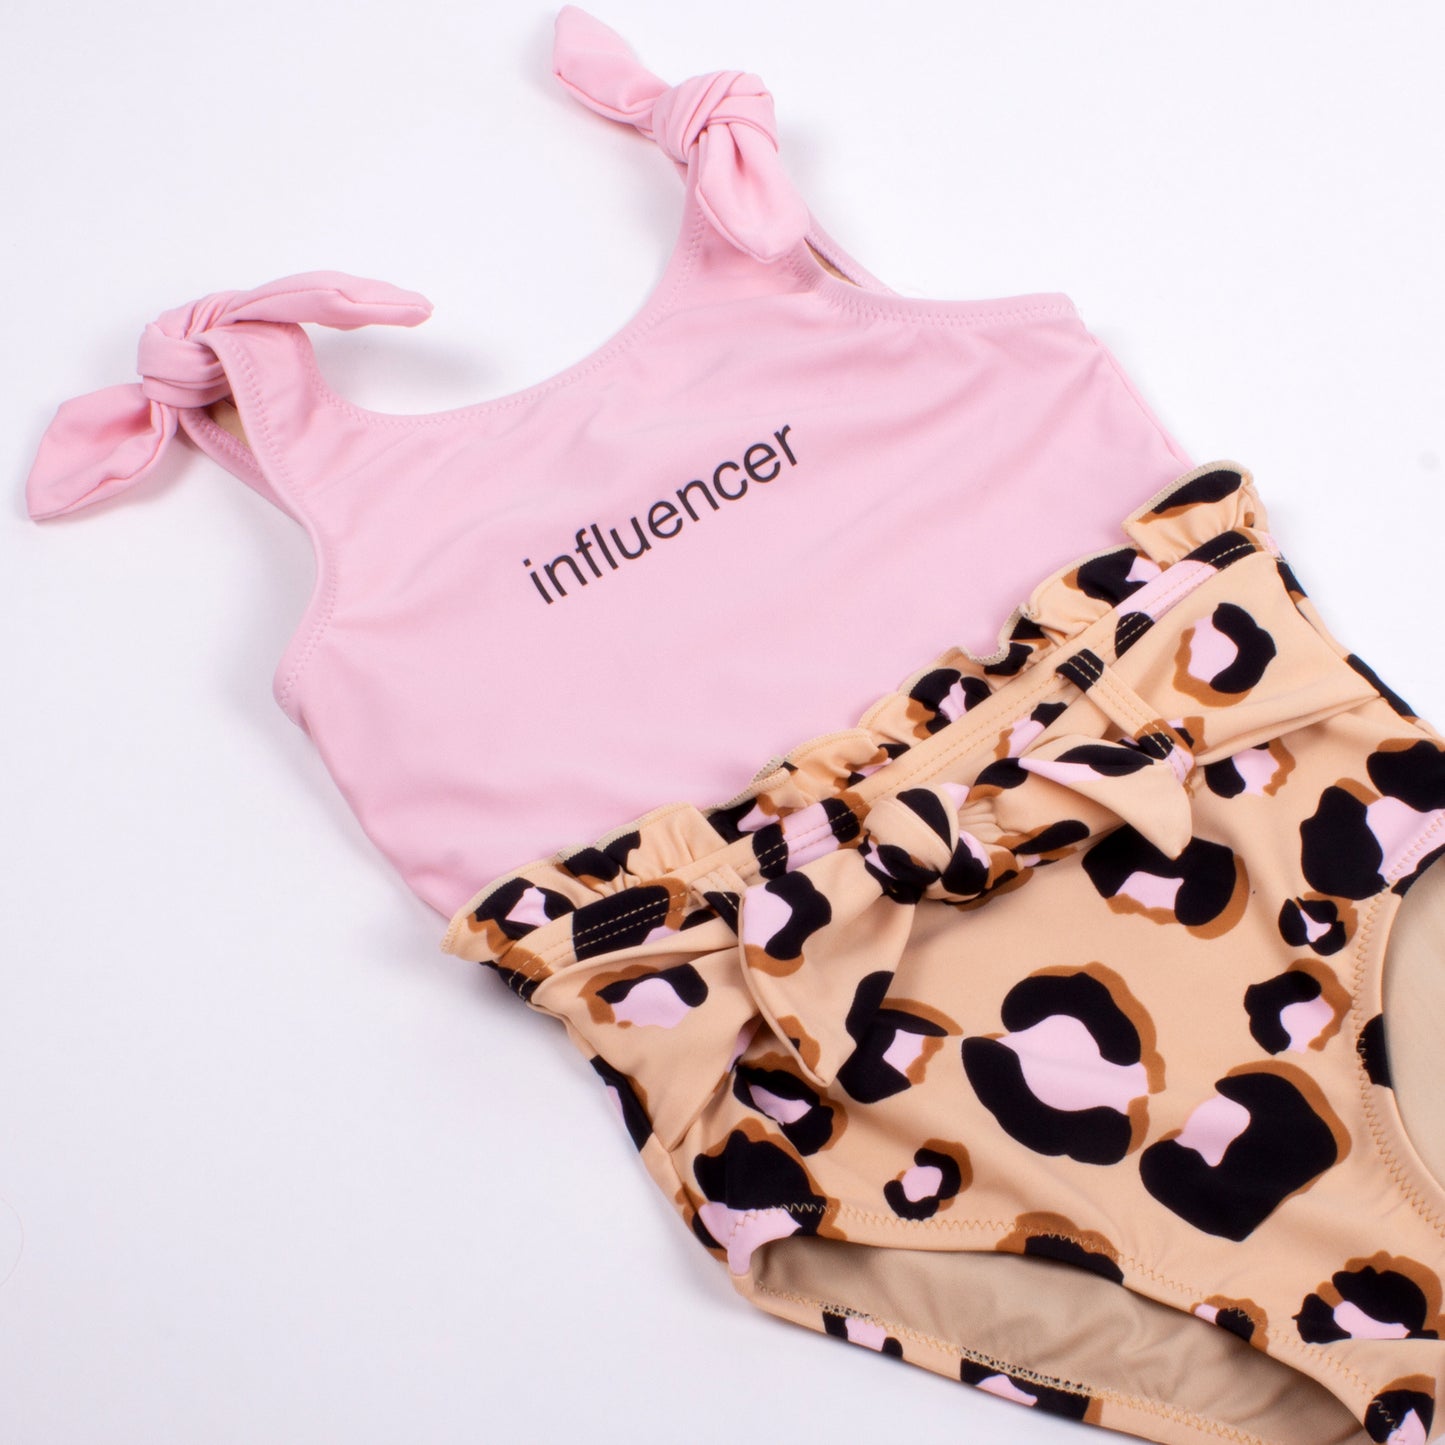 Leopard Influencer Ruffle Waist Swimsuit  - Doodlebug's Children's Boutique